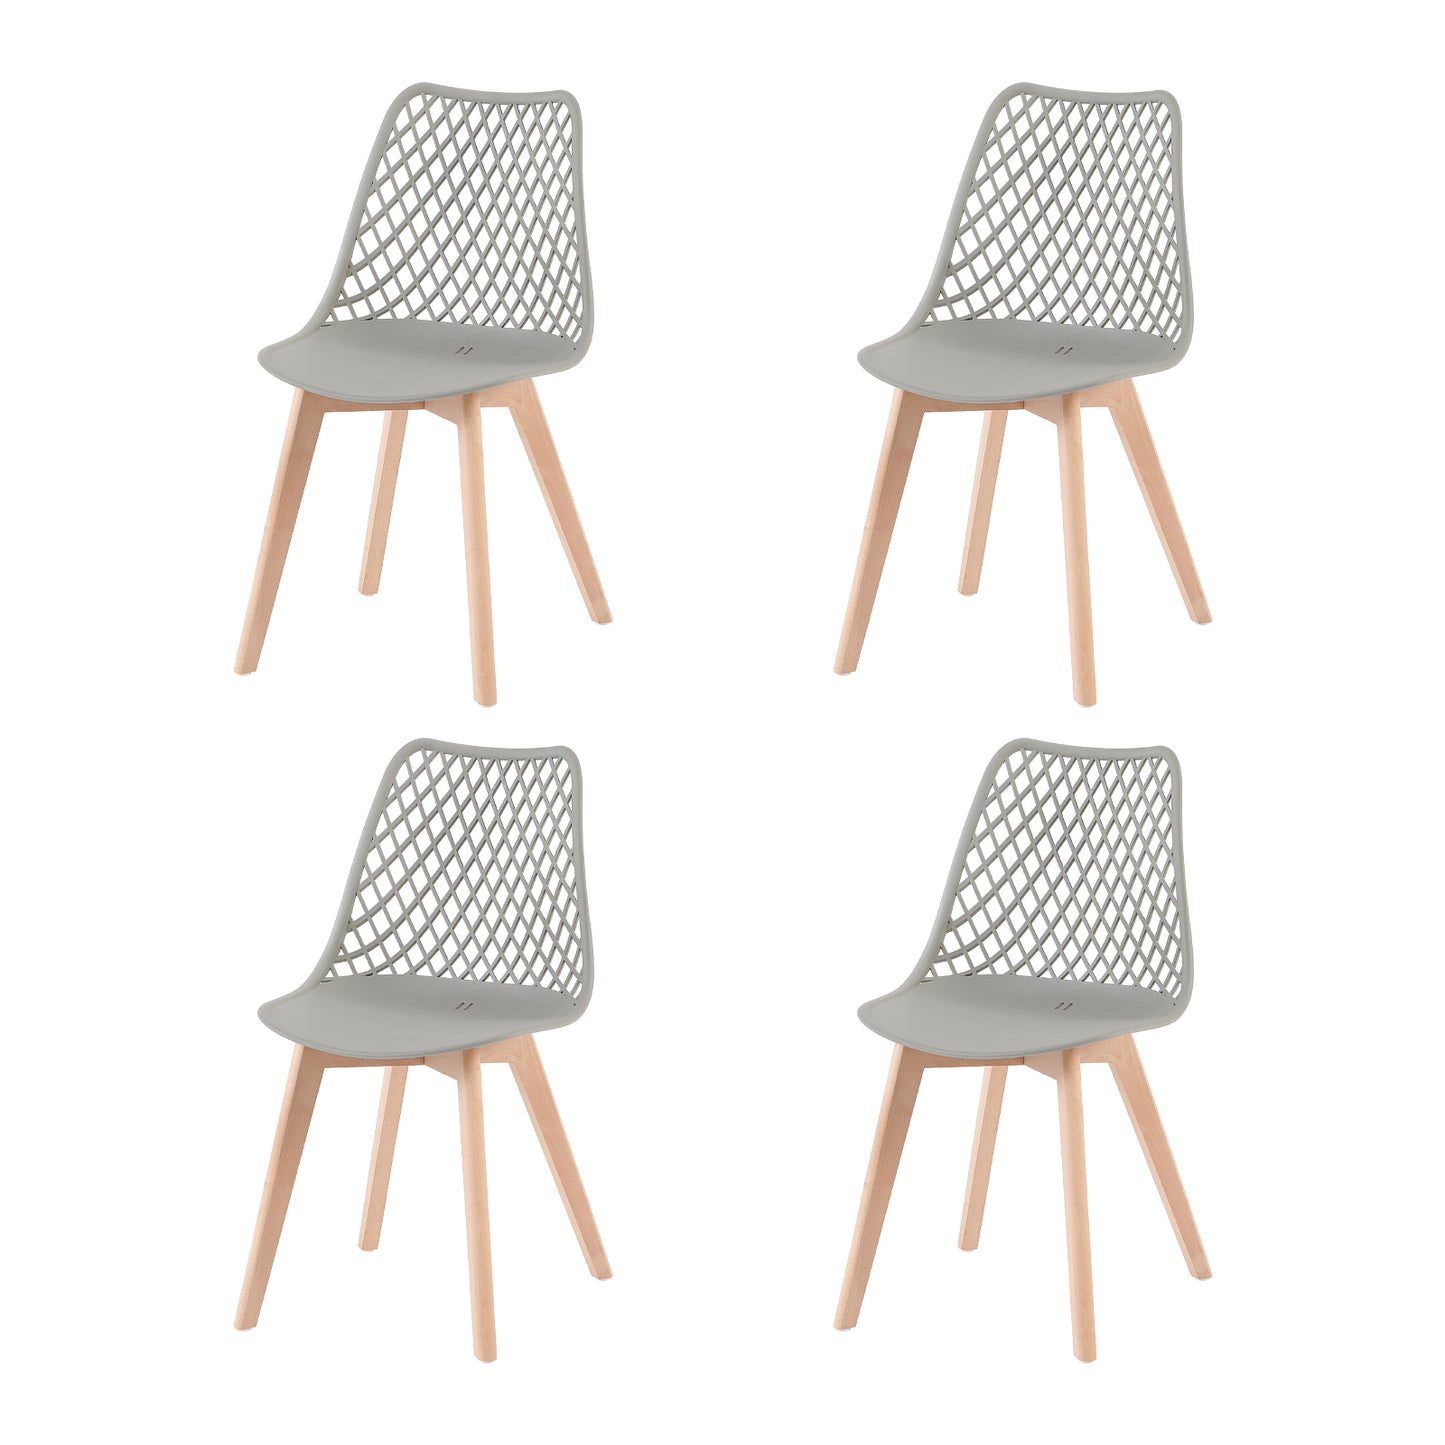 MOLSON Hollow Arm Chair (Set of 4) - Black/Gray/White